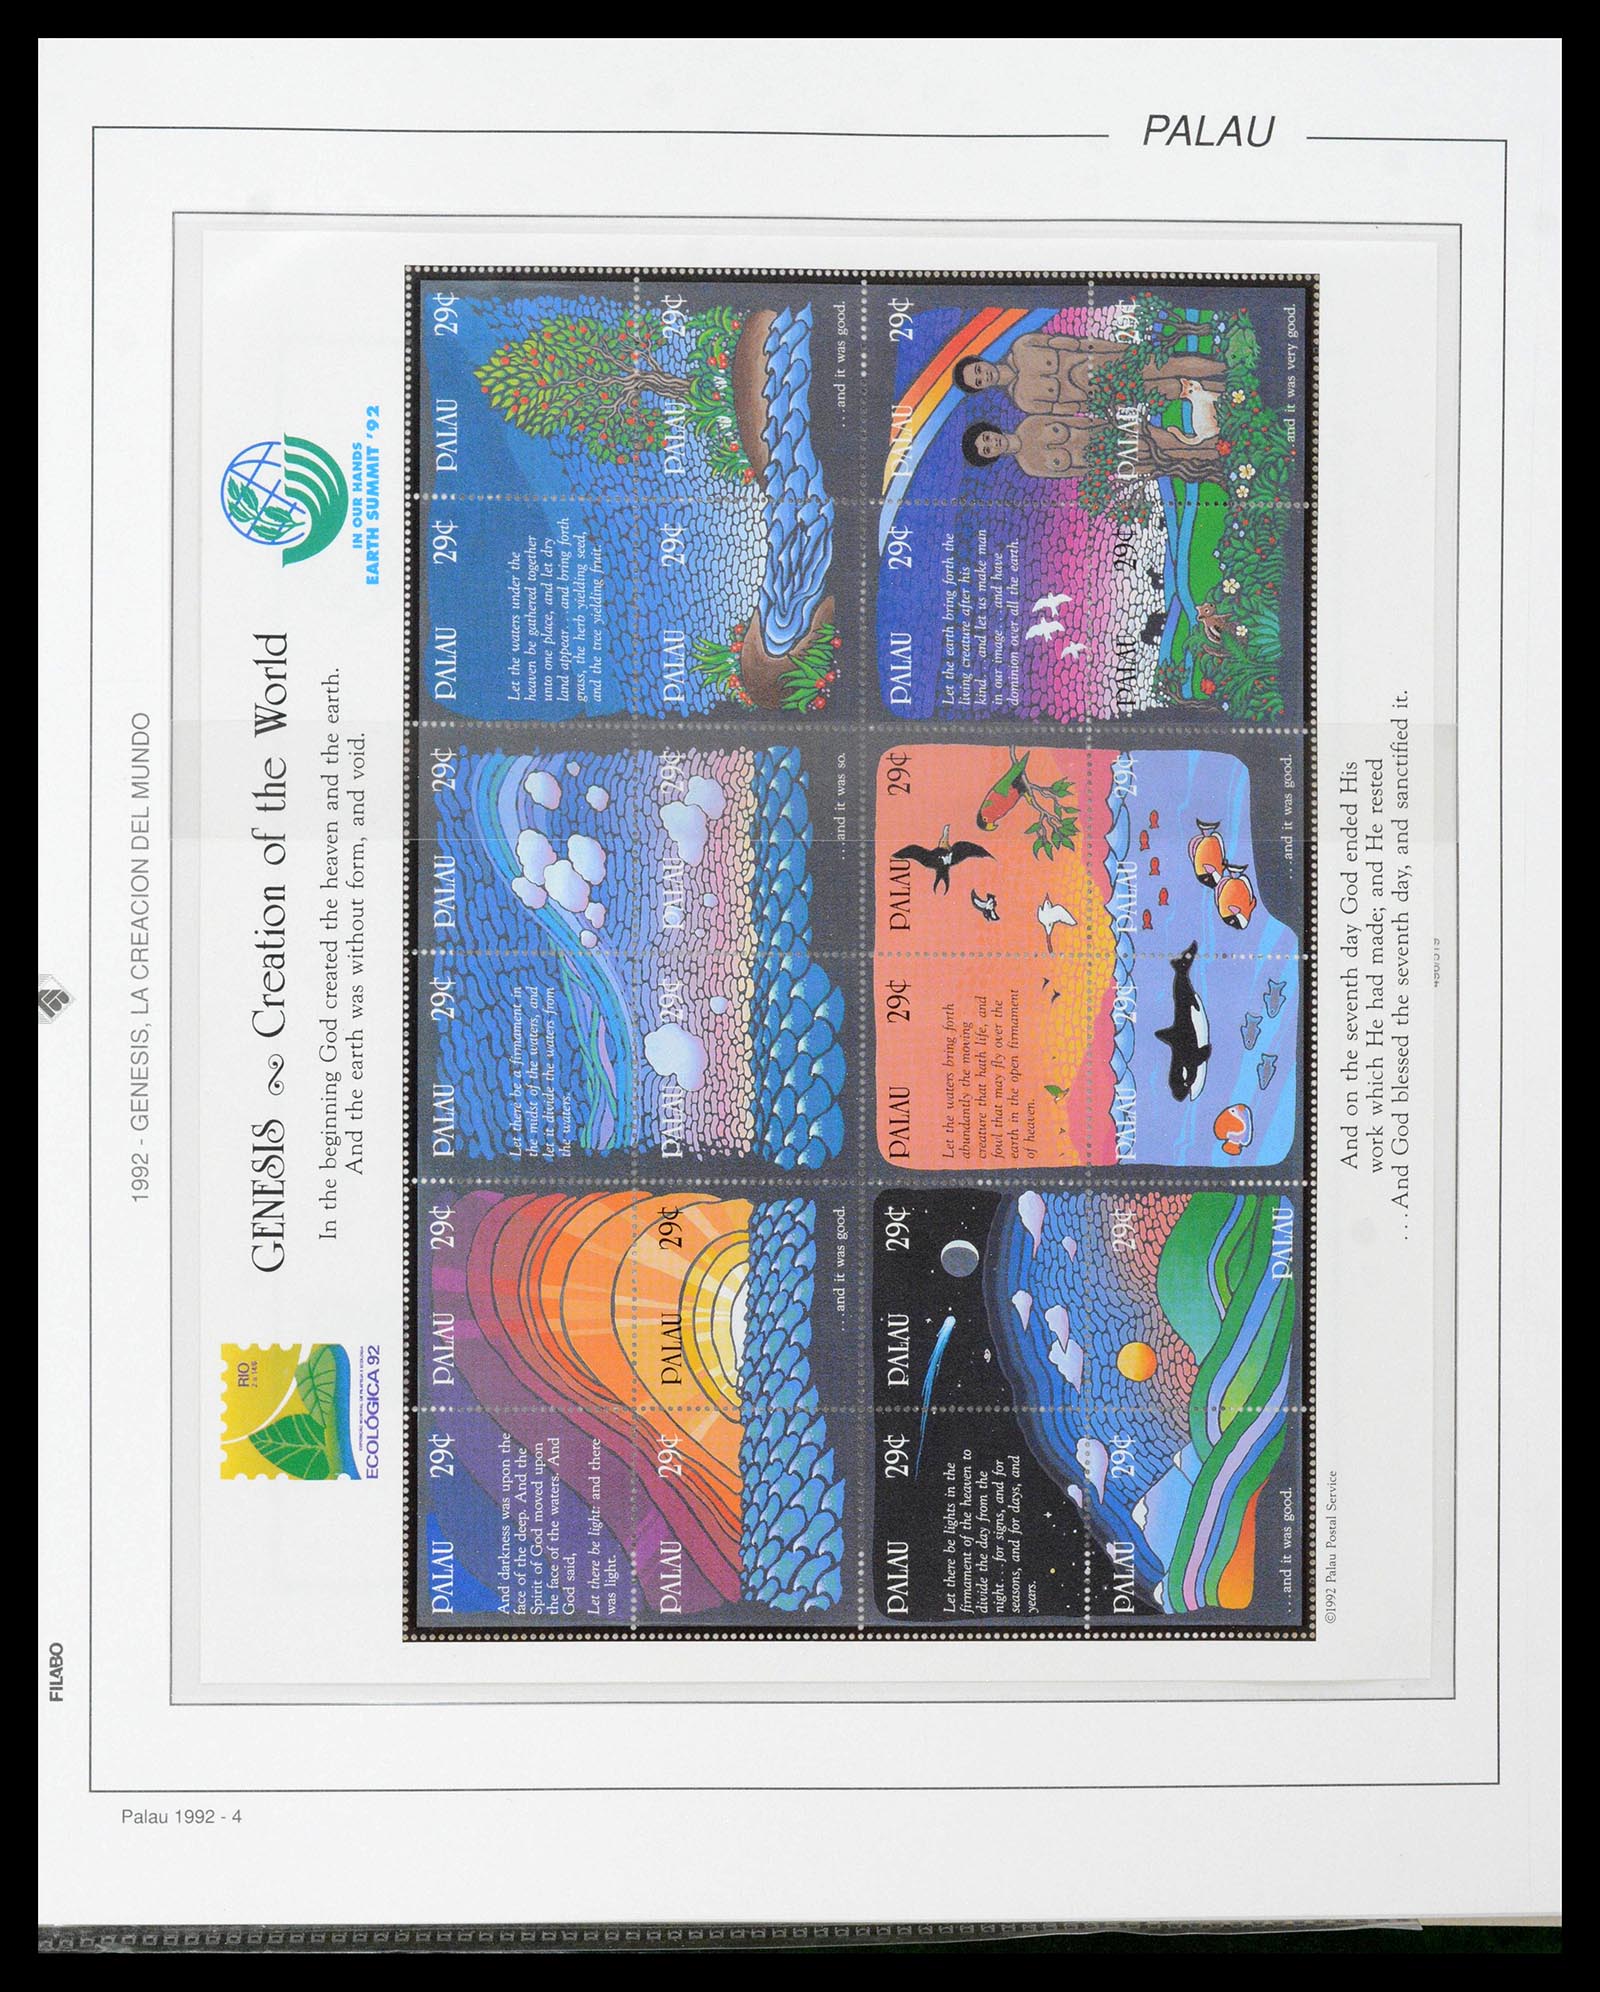 39222 0053 - Stamp collection 39222 Palau, Micronesia and Marshall islands 1980-1995.